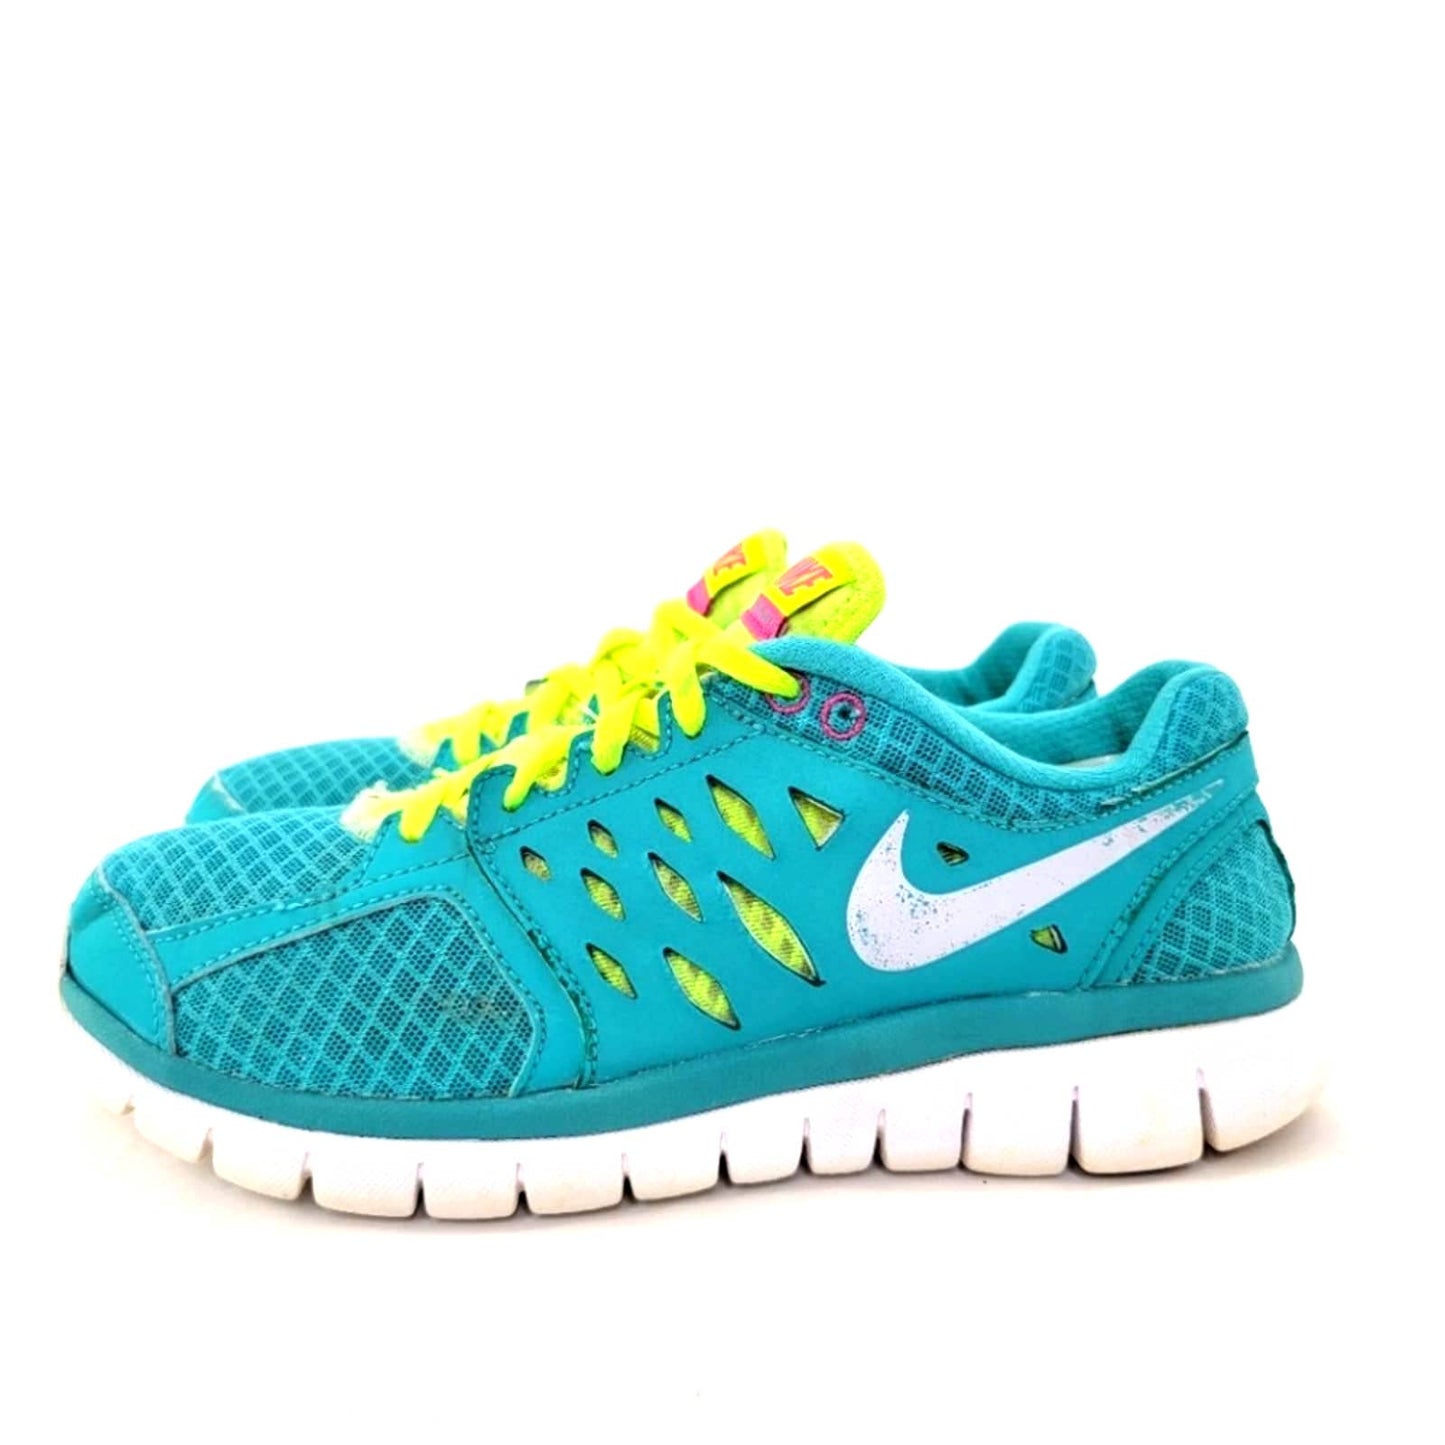 Nike Flex 2013 Running Shoes - 7